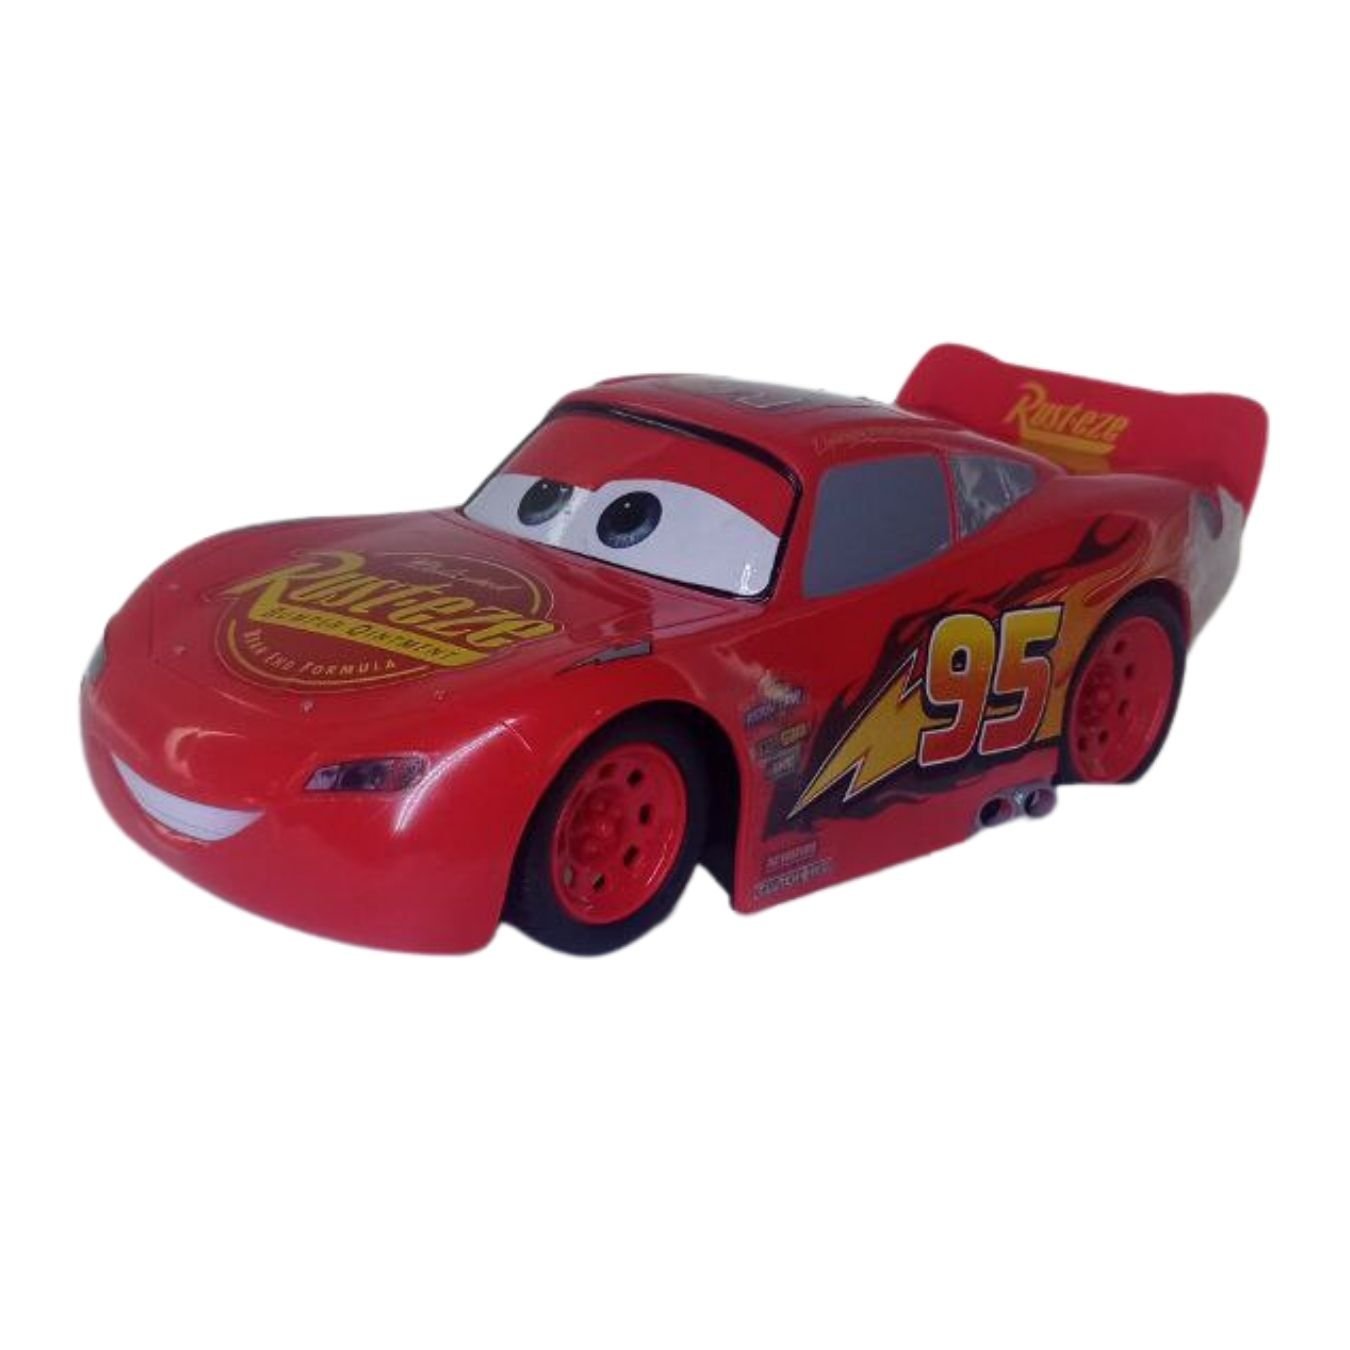 Carro de Controle Remoto Grande - Disney Cars Relampago McQueen